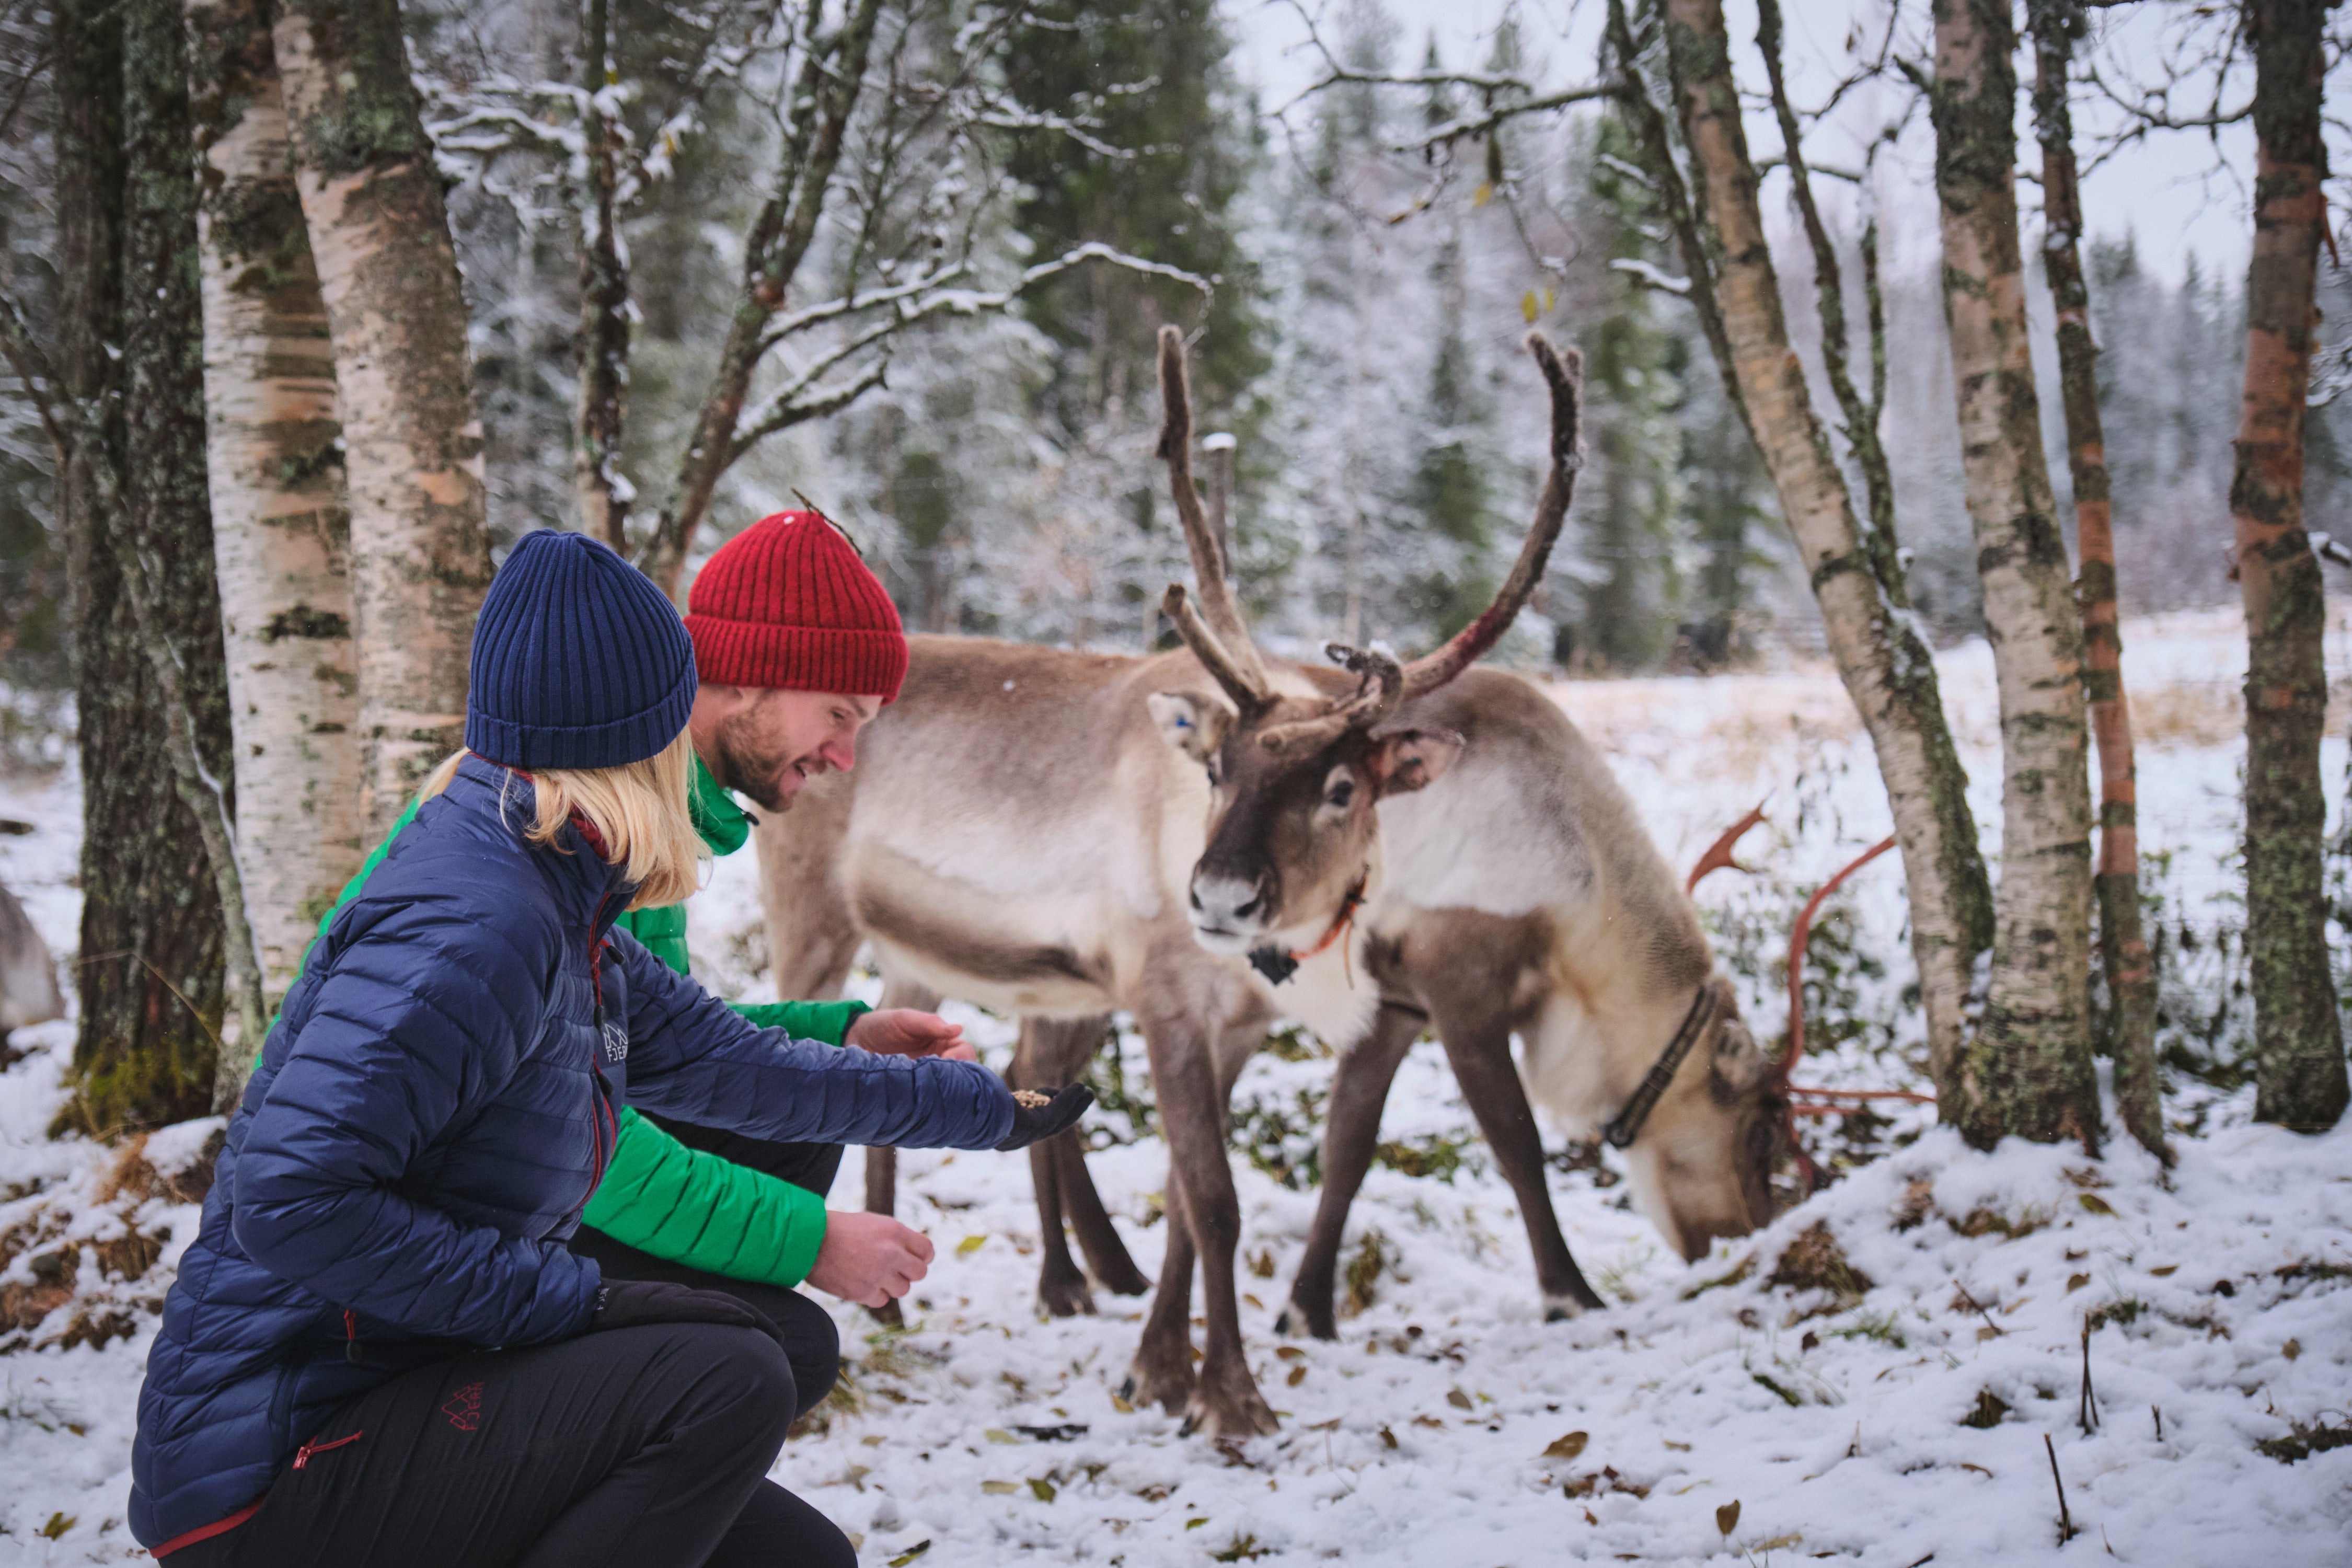 Feeding Finnish reindeer in a snowy forest featuring Aktiv Jackets